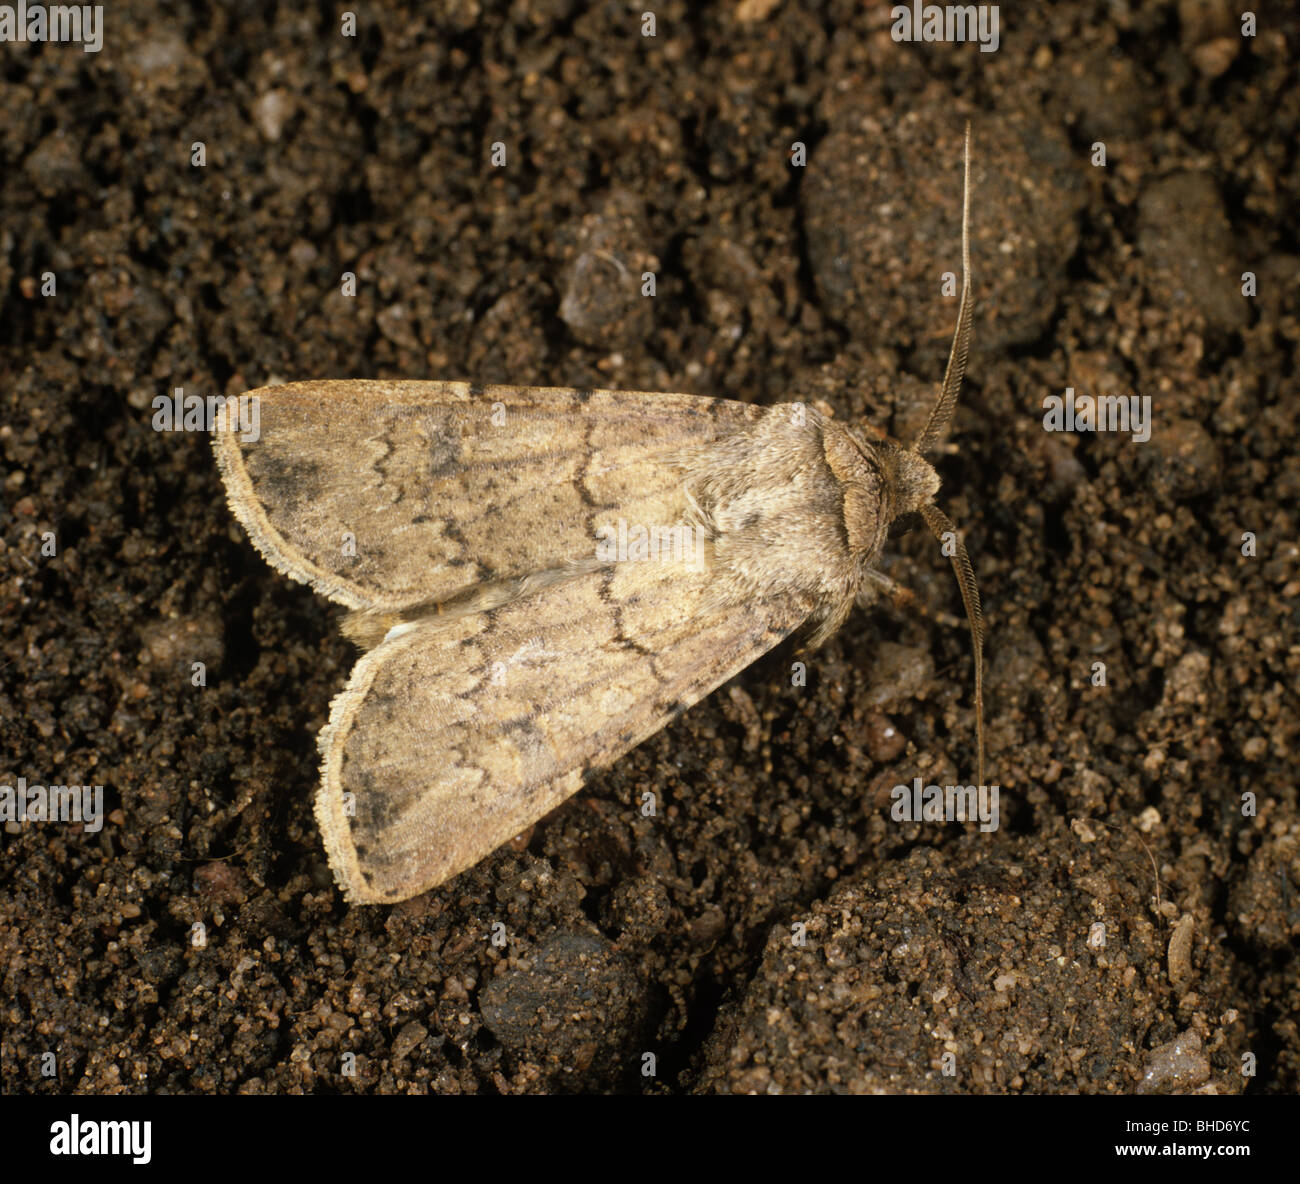 Turnip cutworm (Agrotis segetum) moth on the soil surface Stock Photo